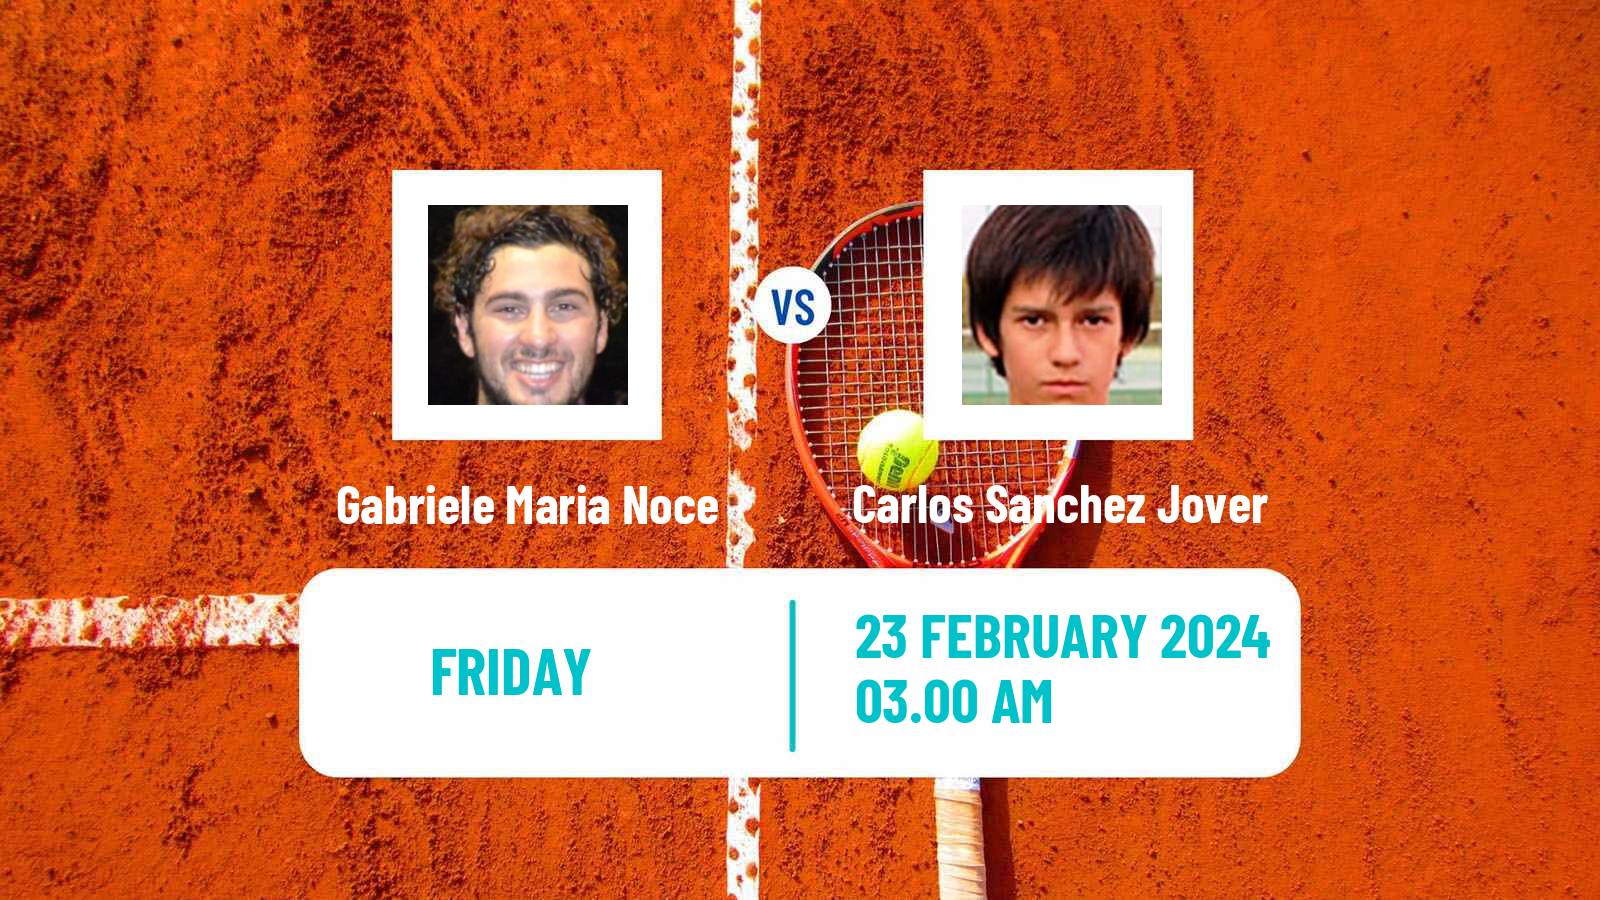 Tennis ITF M25 Hammamet 4 Men Gabriele Maria Noce - Carlos Sanchez Jover